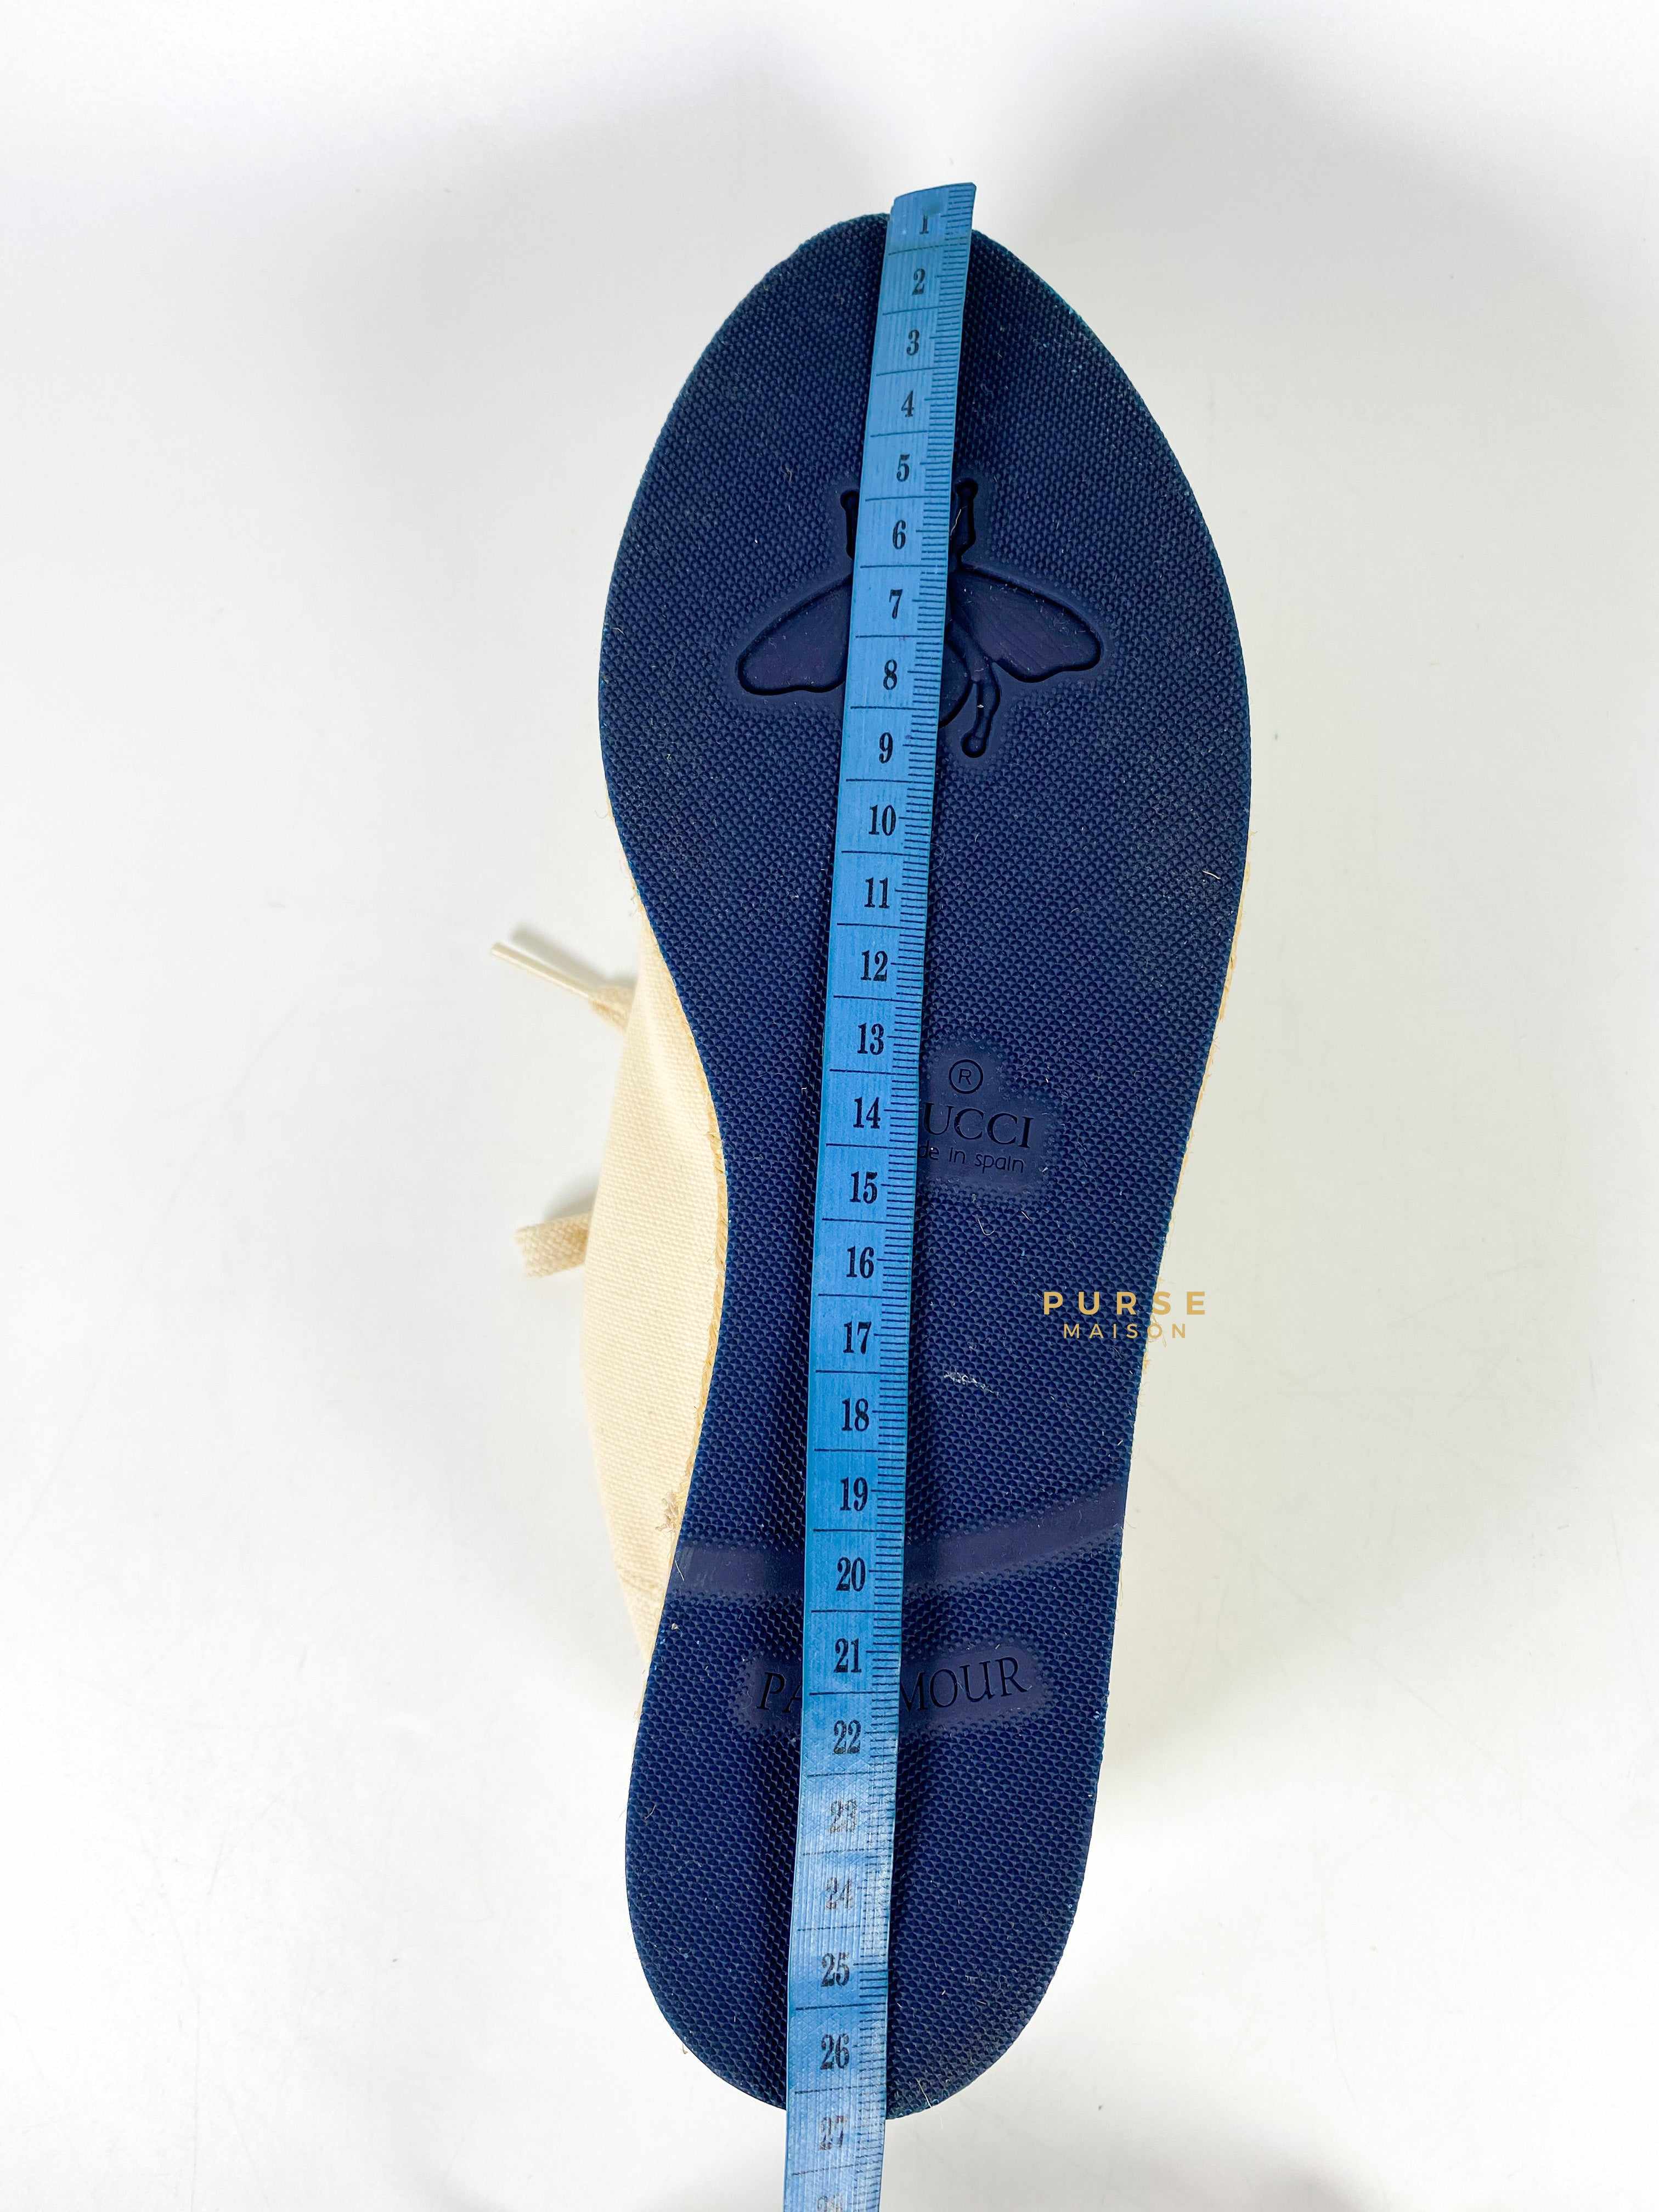 Gucci Espadrille Lace Up Platform in Cream Canvas Sneakers (Size 38 EU, 24.5cm)